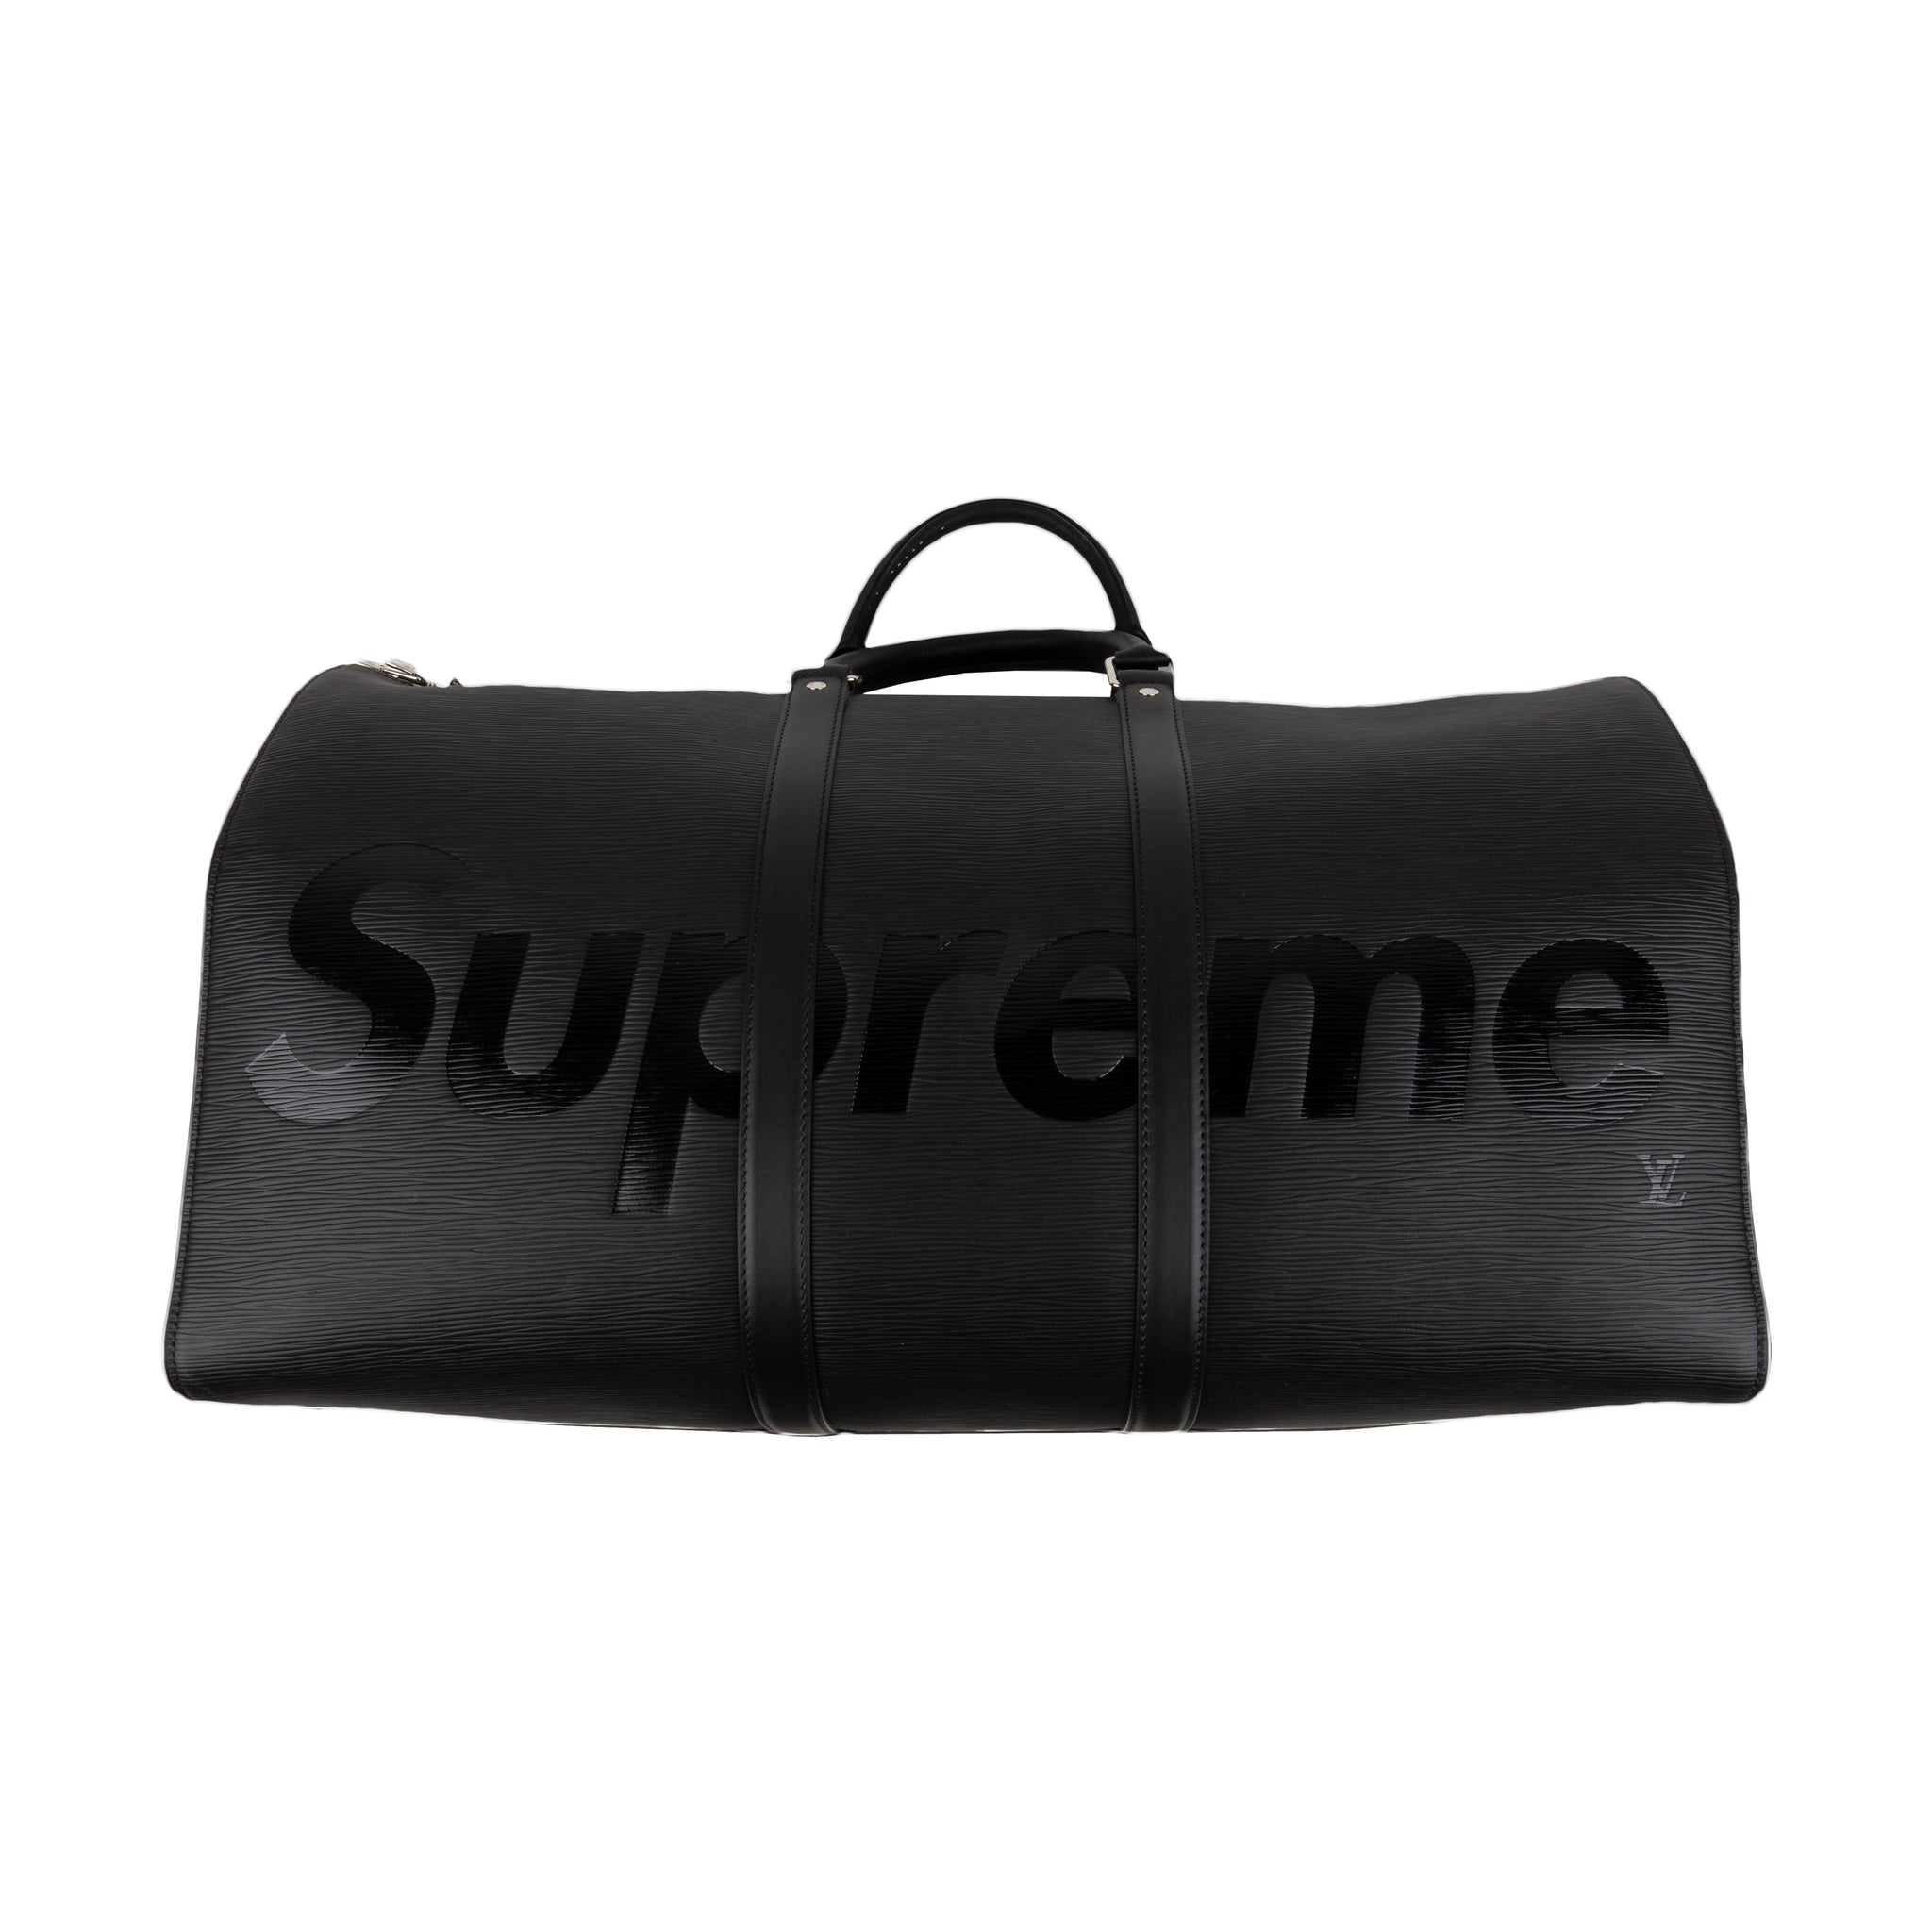 Lv supreme gym bags